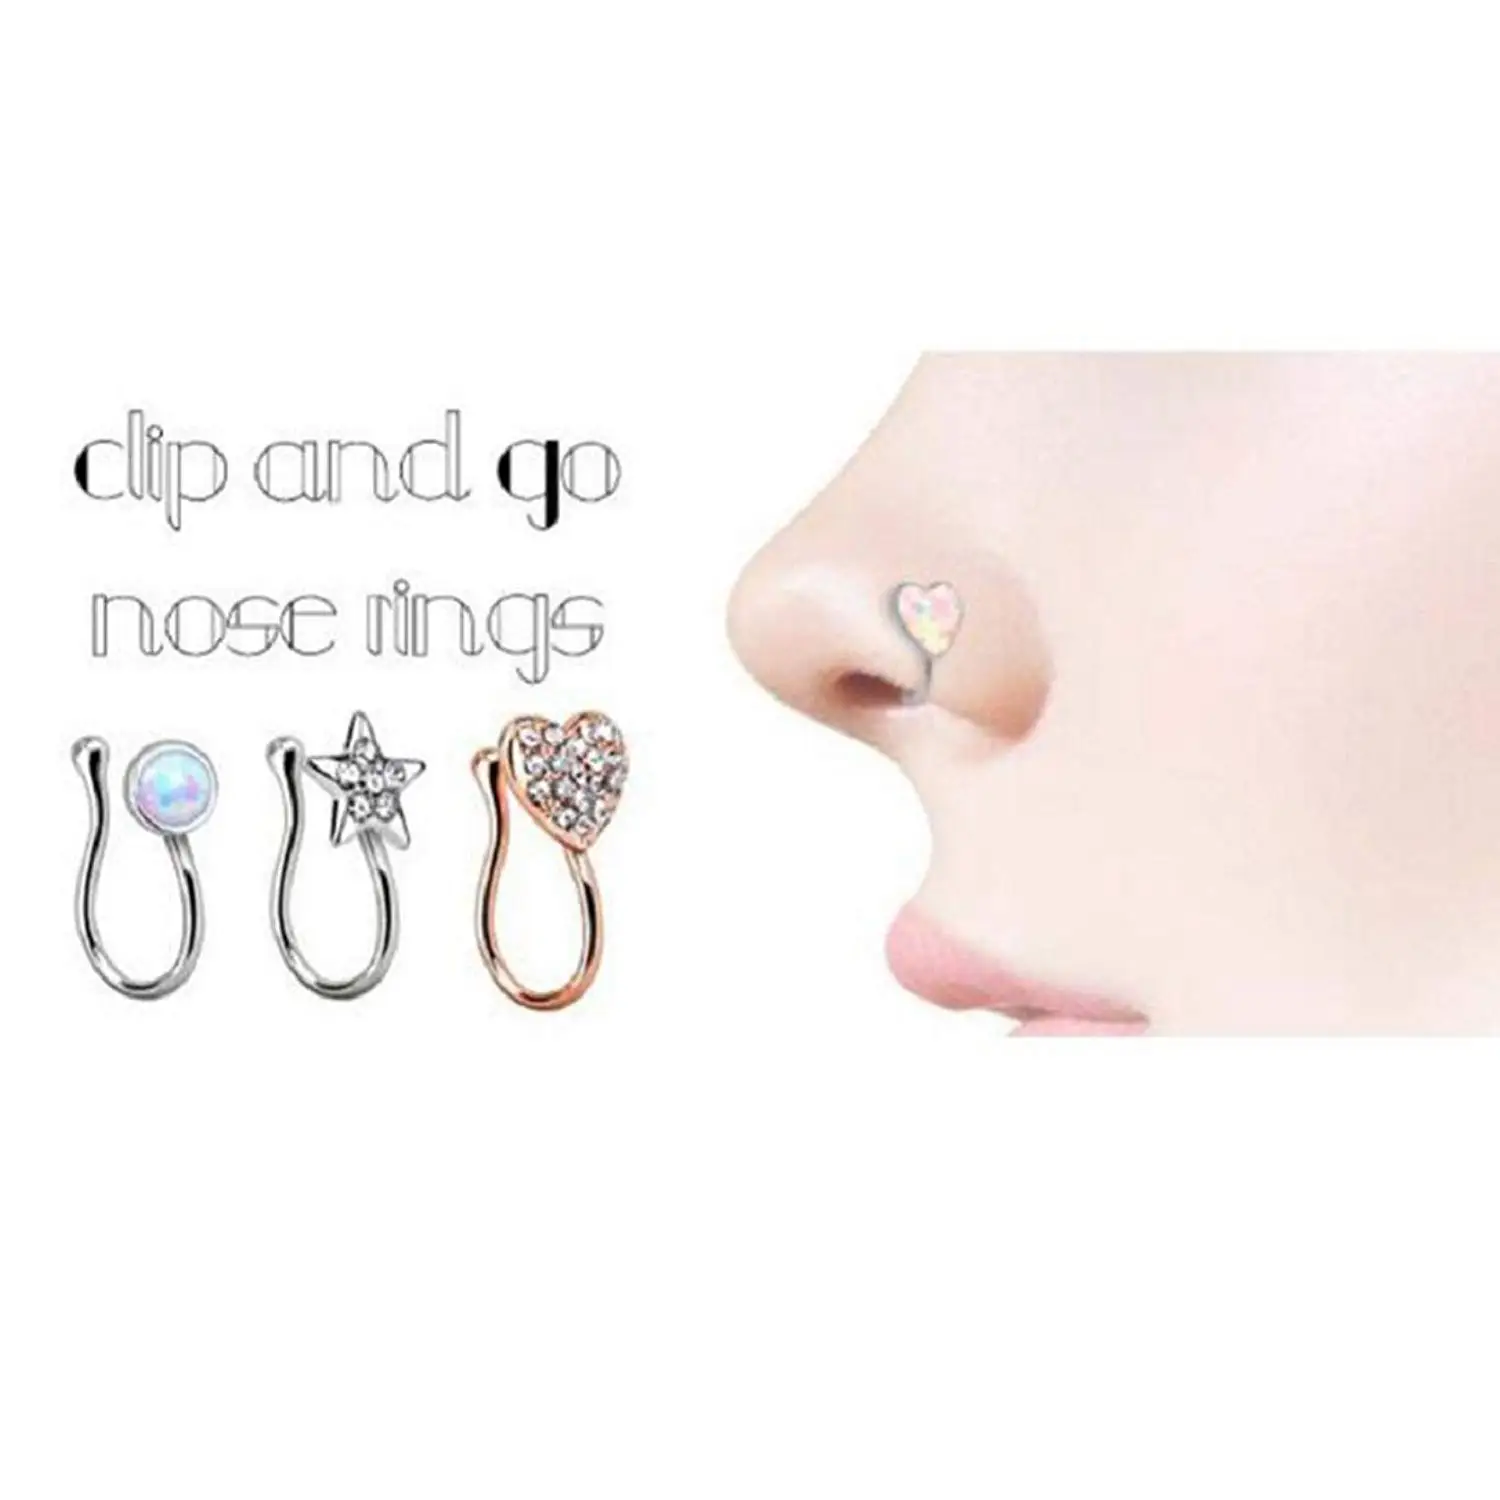 20 Gauge Mudder Nose Ring Hoop Cartilage Hoop Body Jewelry Piercing for Ear Cartilage Lip Nose 10 Piece